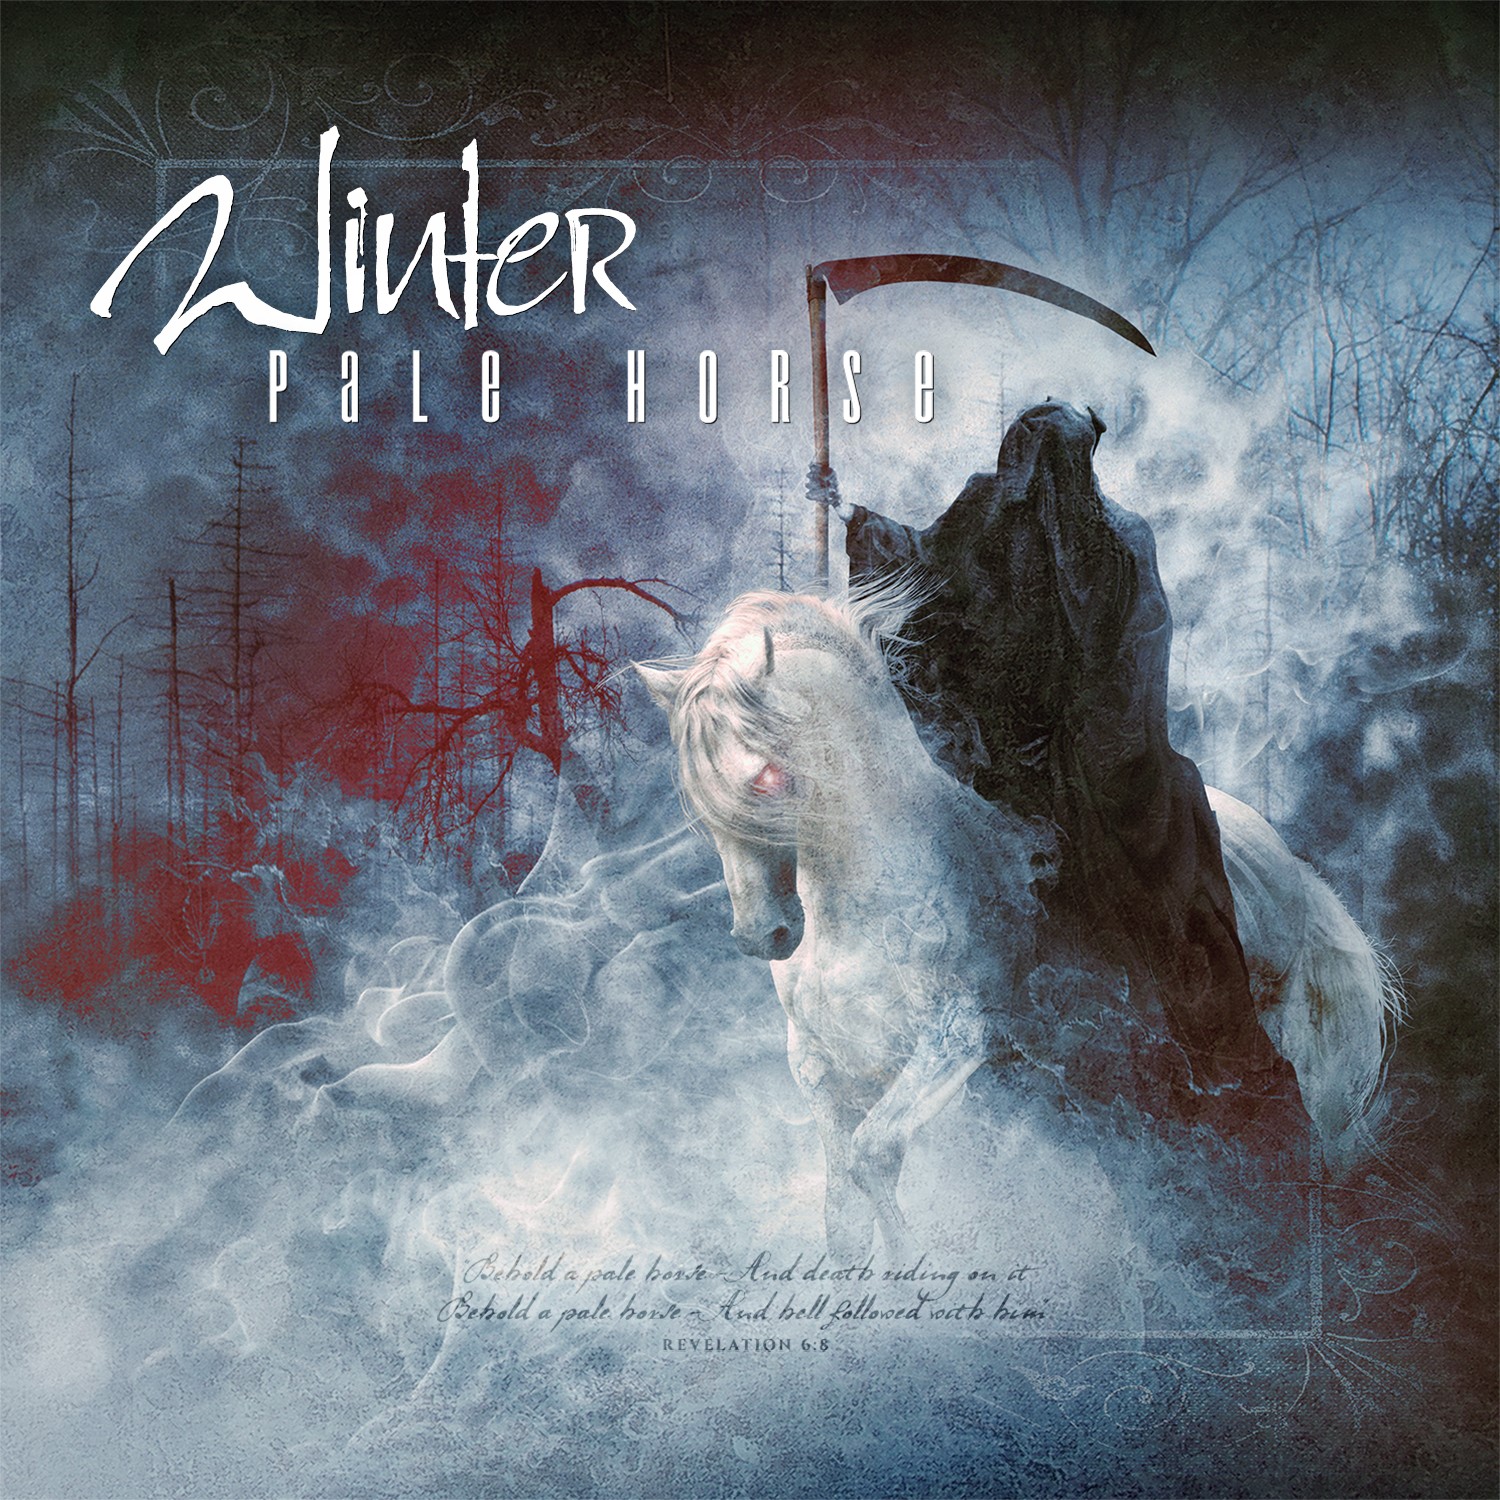 WINTER pale horse album cover